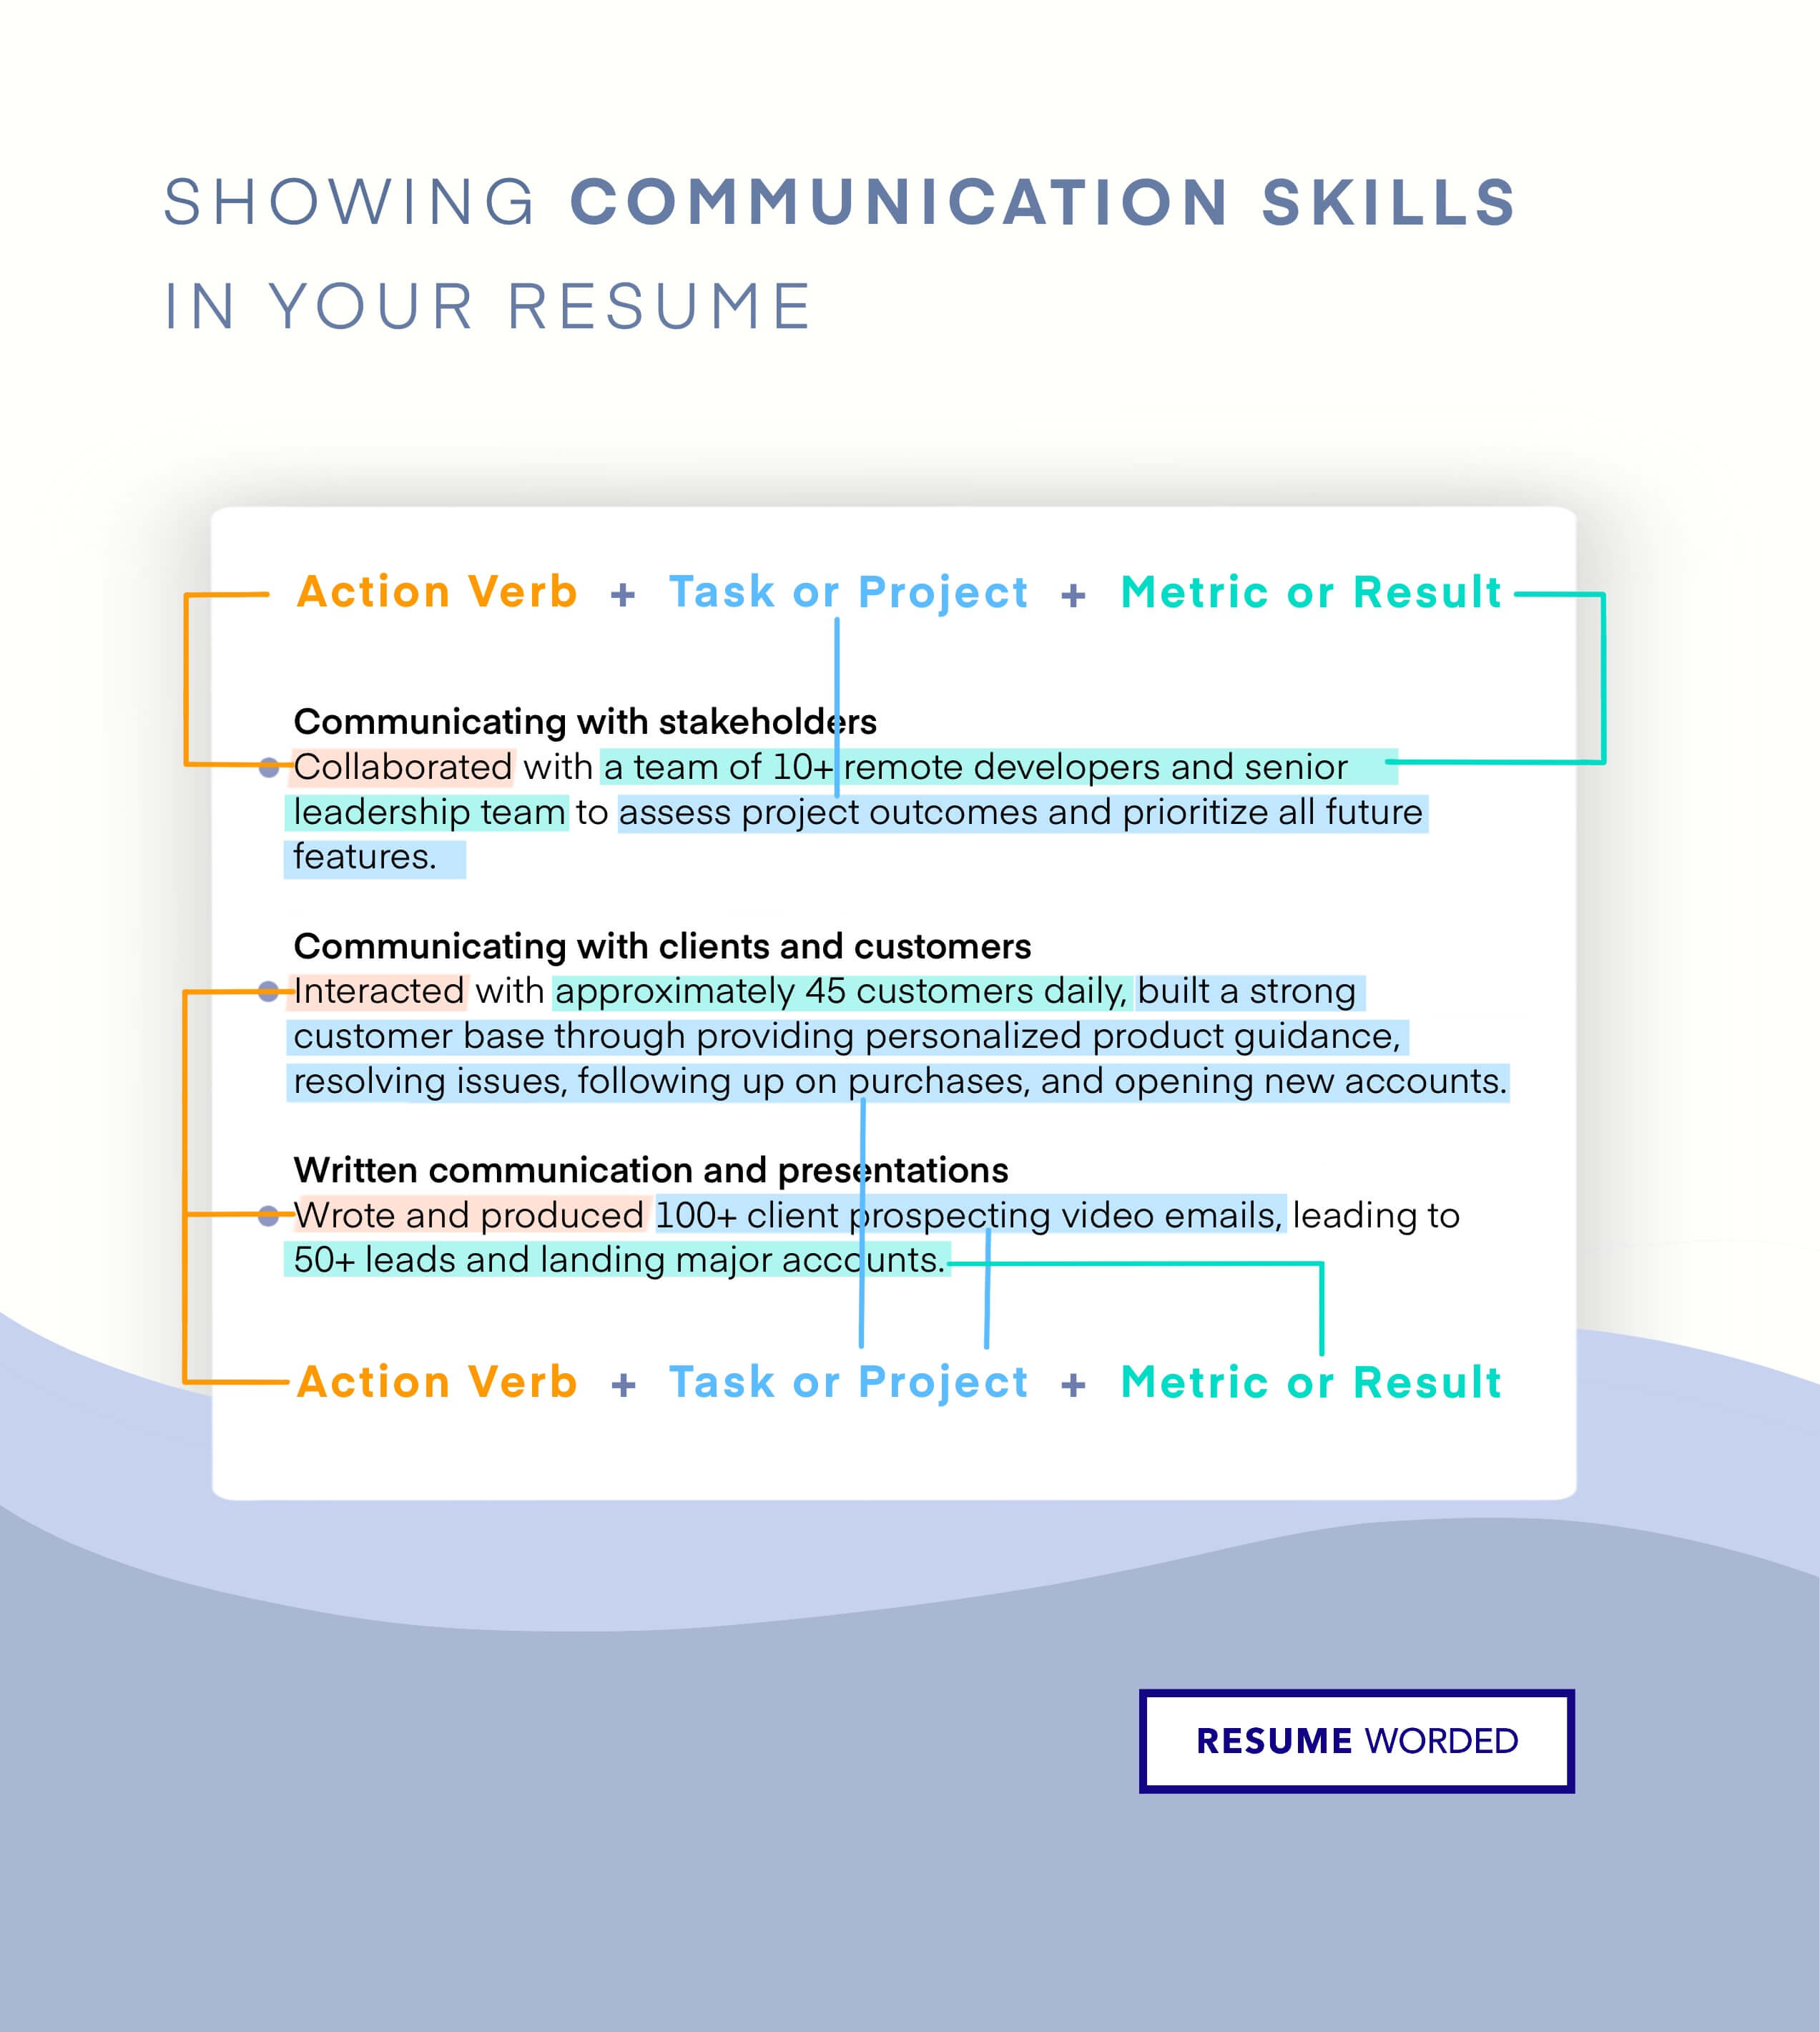 Display your leadership and communication skills - Director of Data Analytics CV